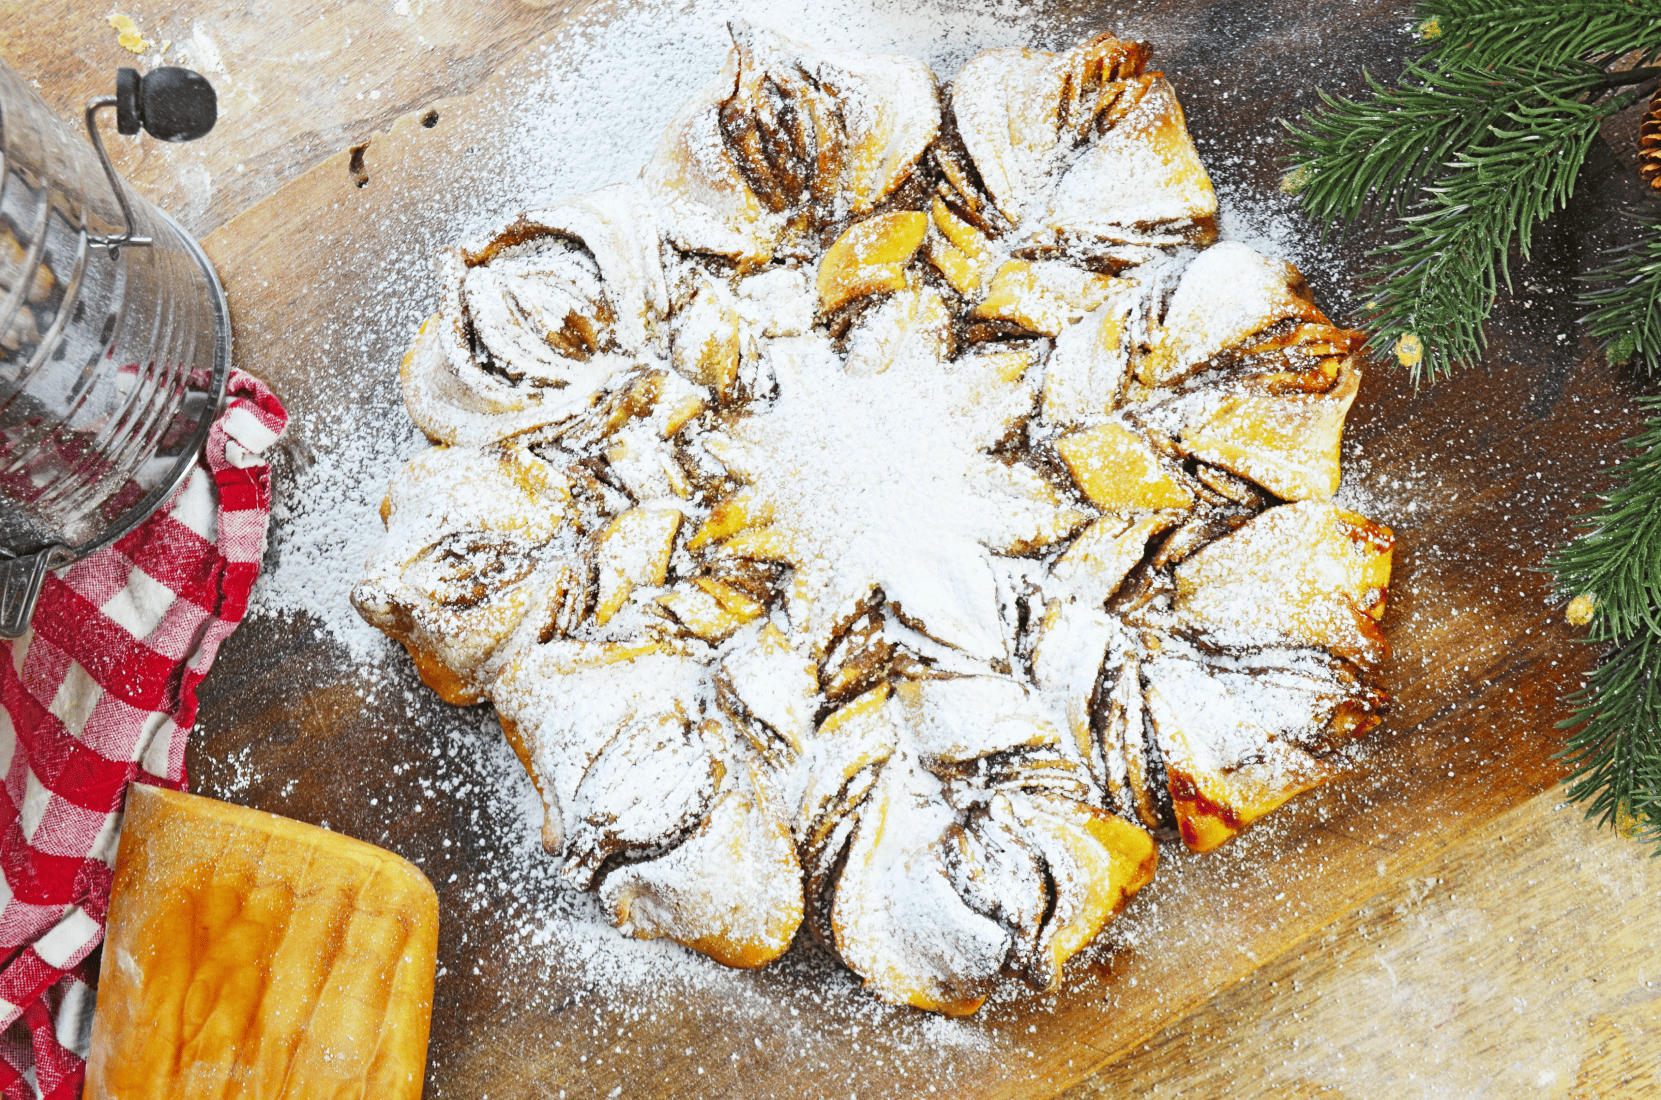 Powder Sugar covered cinnamon streusel sourdough snowflake bread